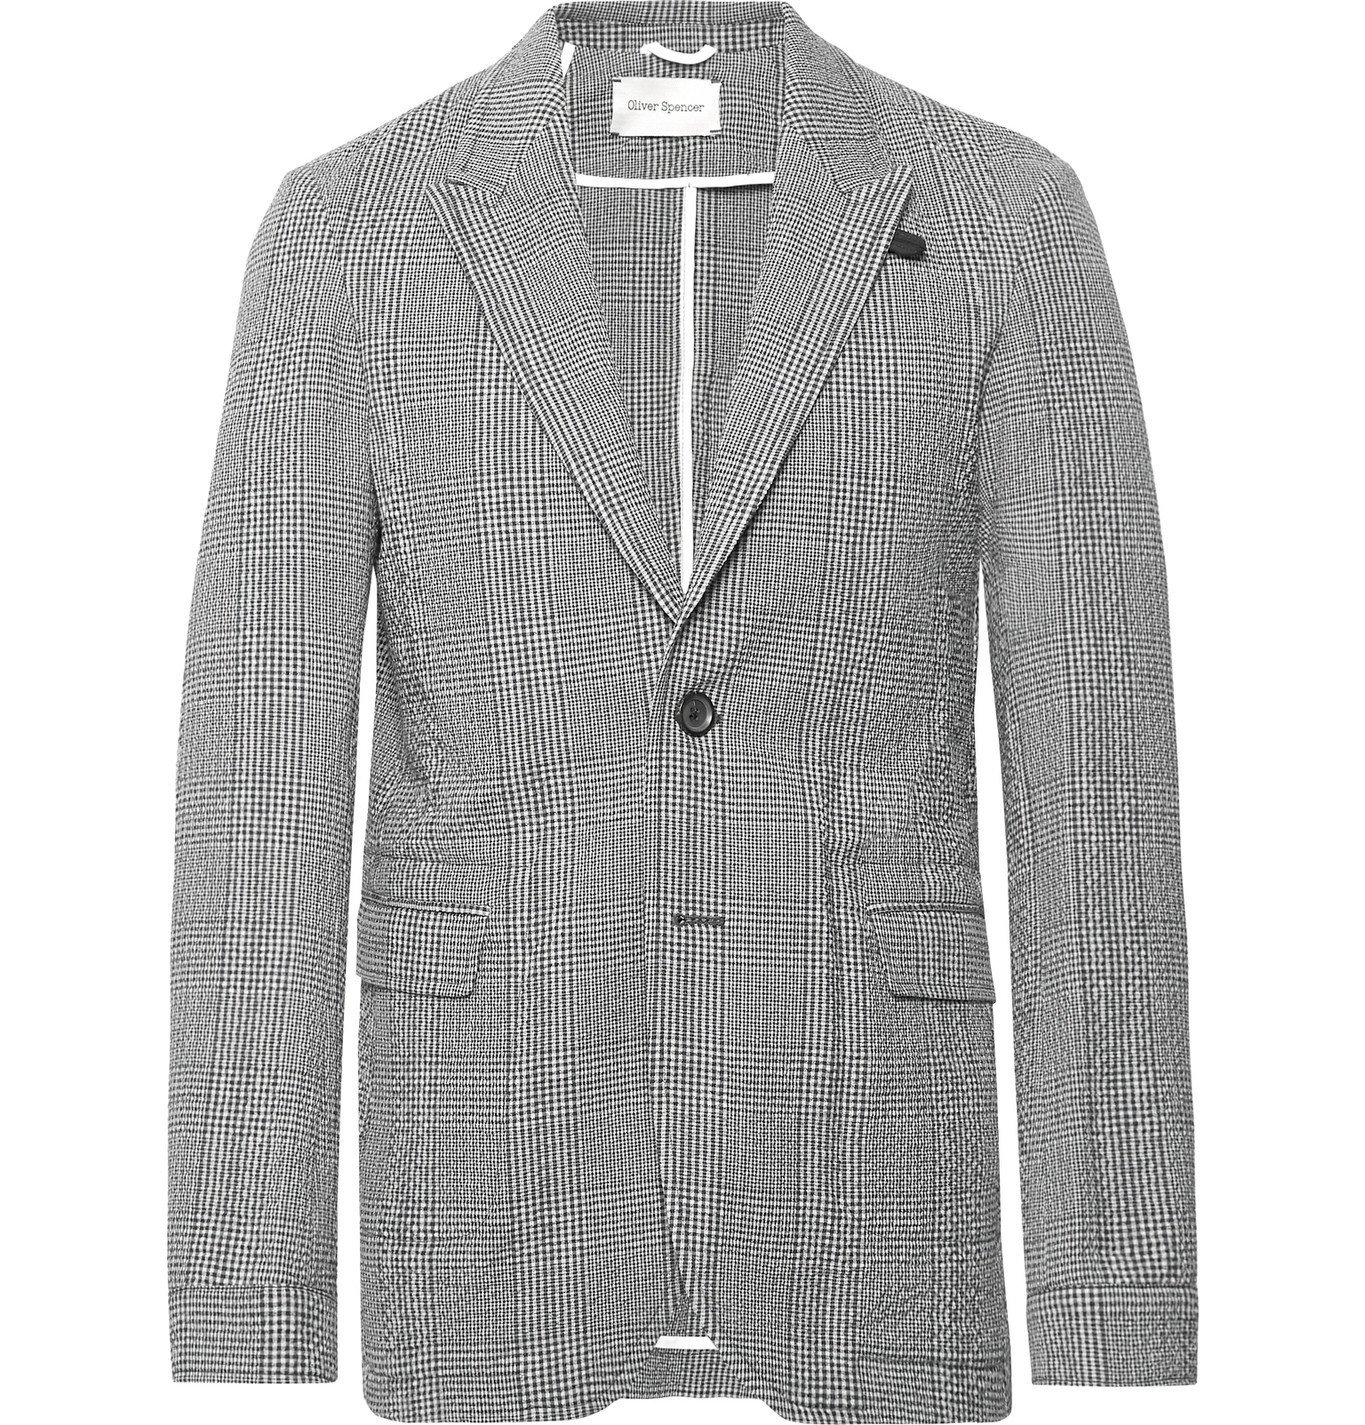 Oliver Spencer - Midnight-Blue Brookes Slim-Fit Checked Cotton-Blend Seersucker Suit Jacket - Blue